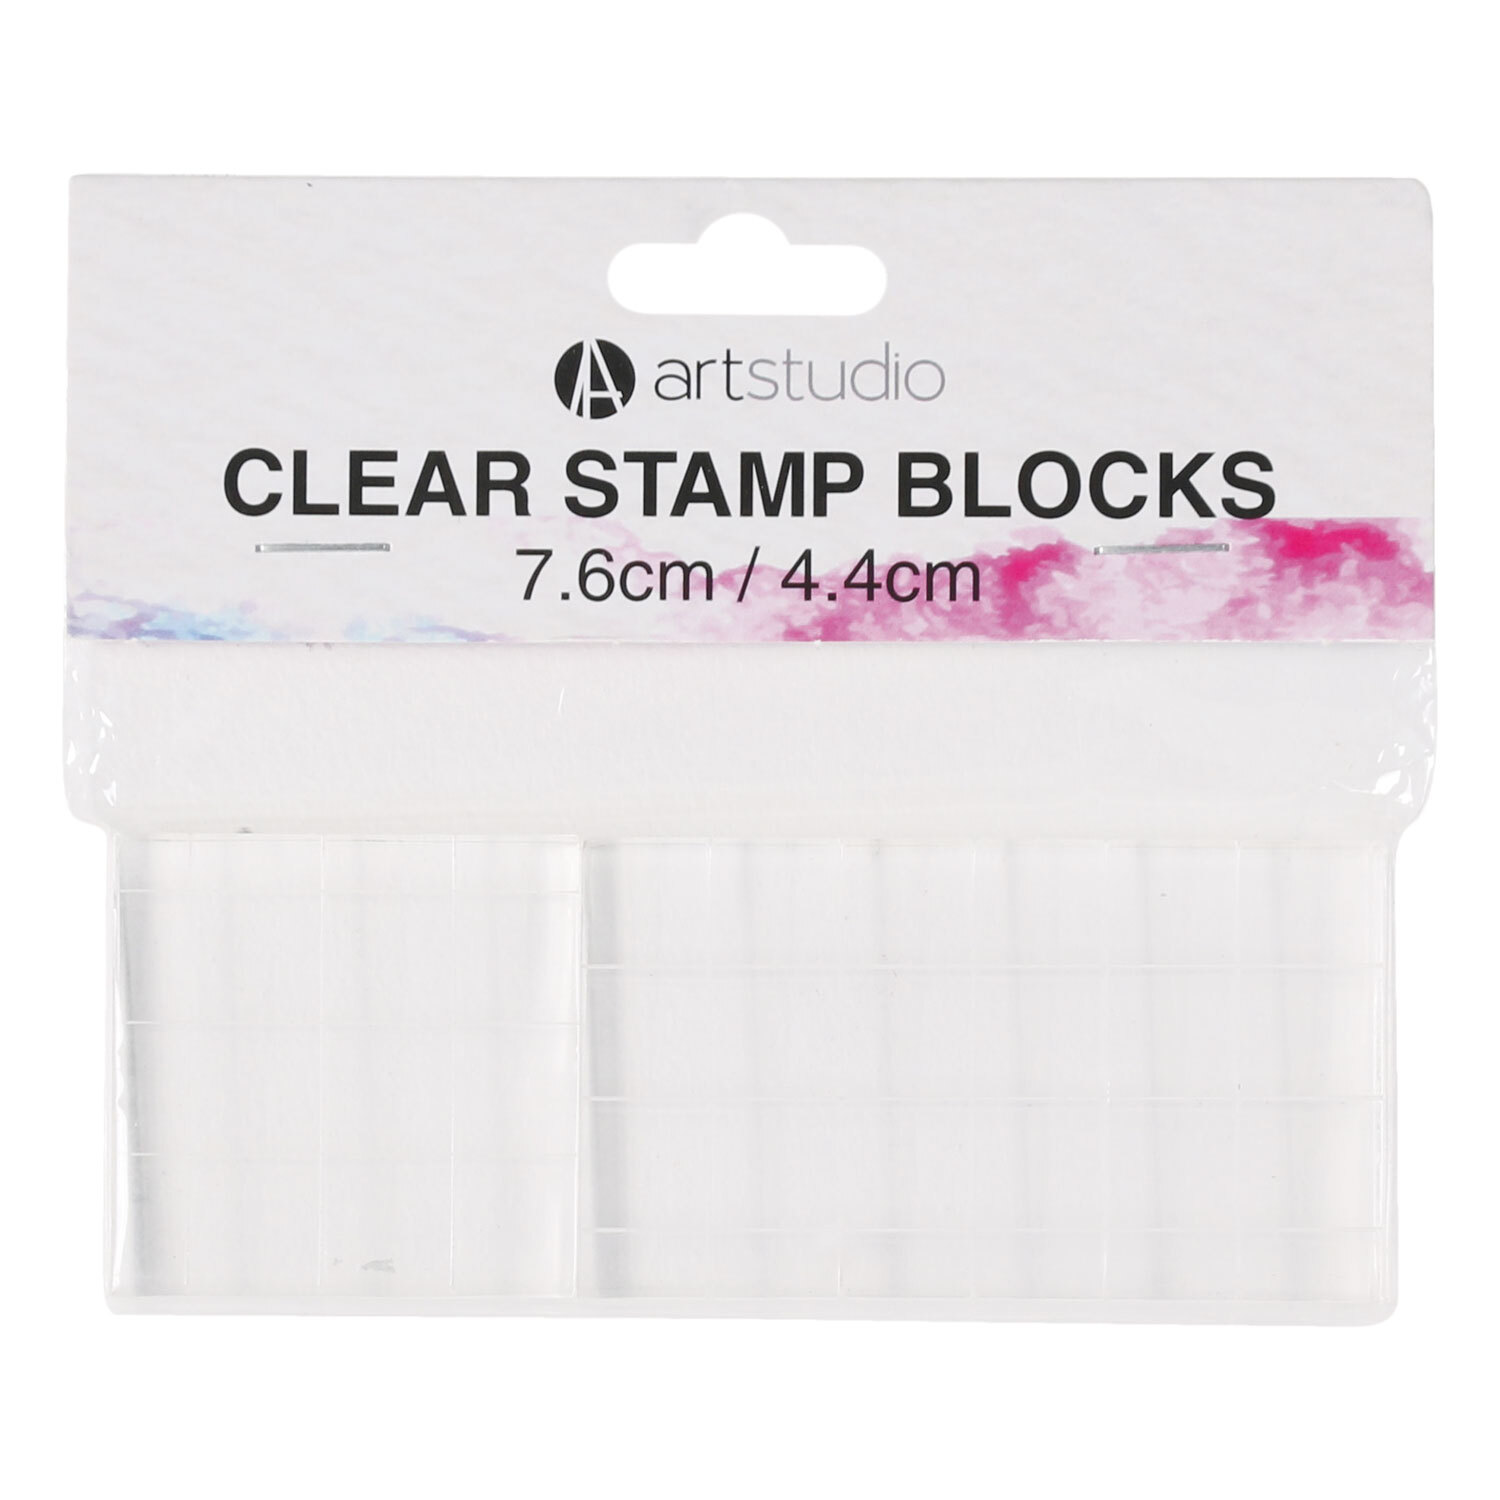 Art Studio Clear Stamp Blocks - 7.6x4.4cm Image